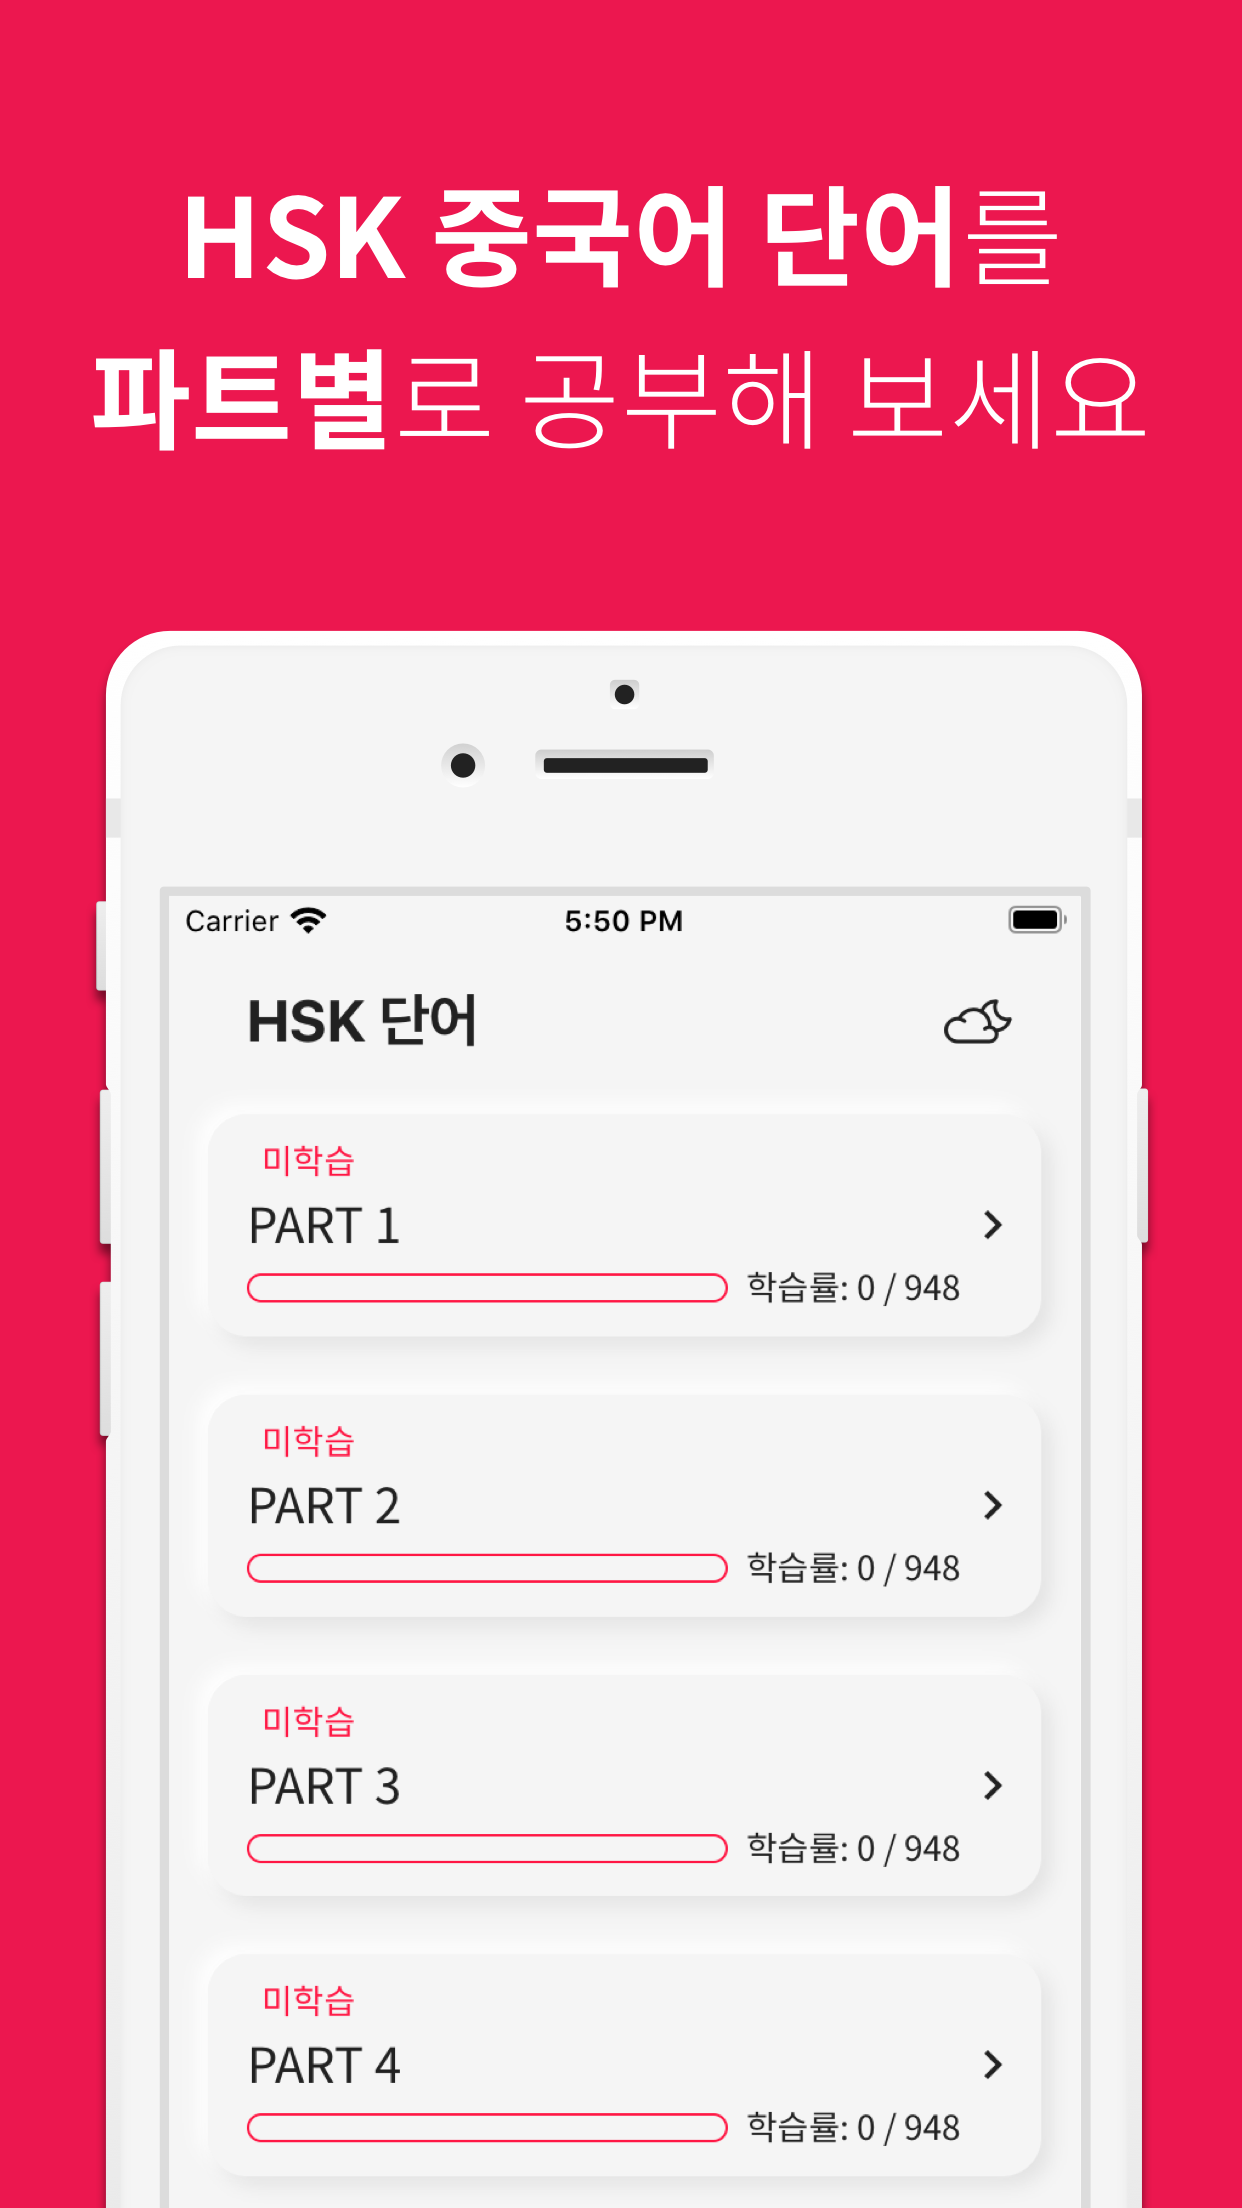 HSK 중국어 단어앱 - 앱 스크린 샷1